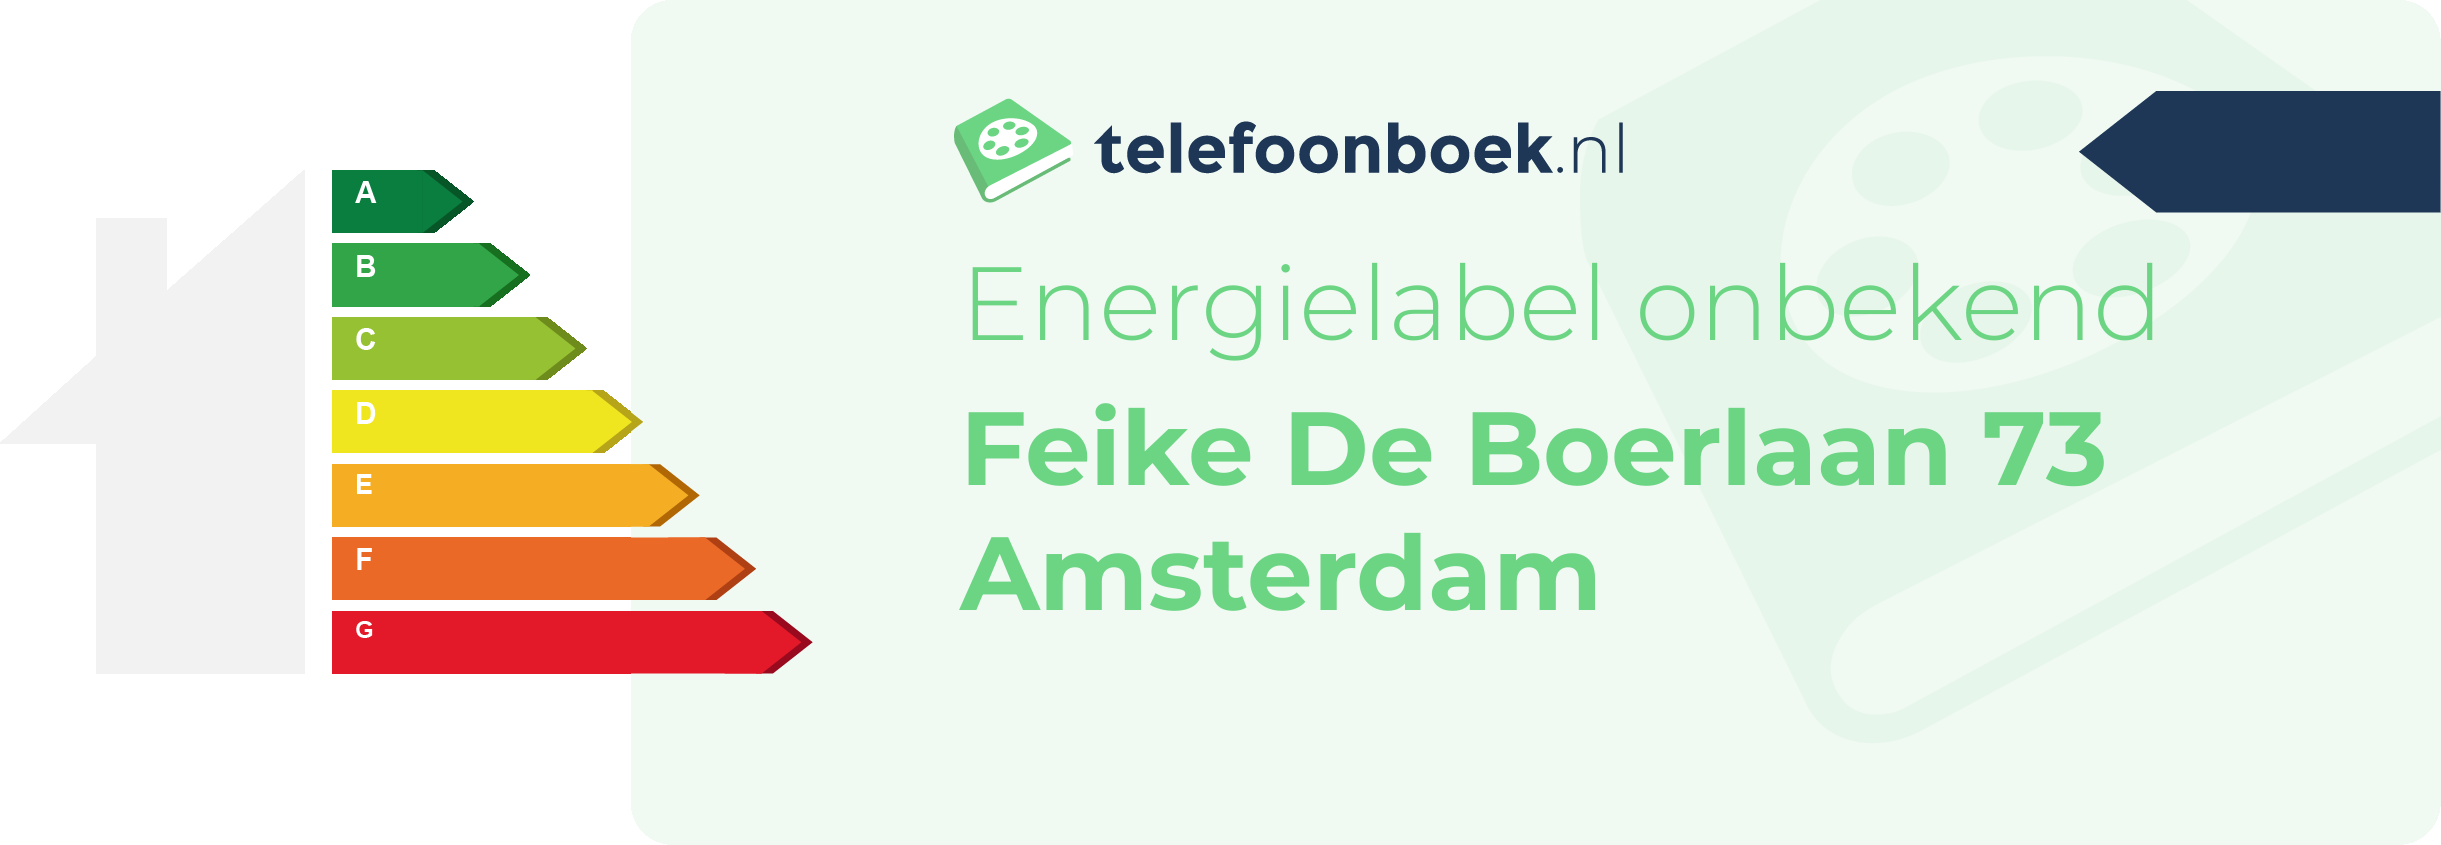 Energielabel Feike De Boerlaan 73 Amsterdam